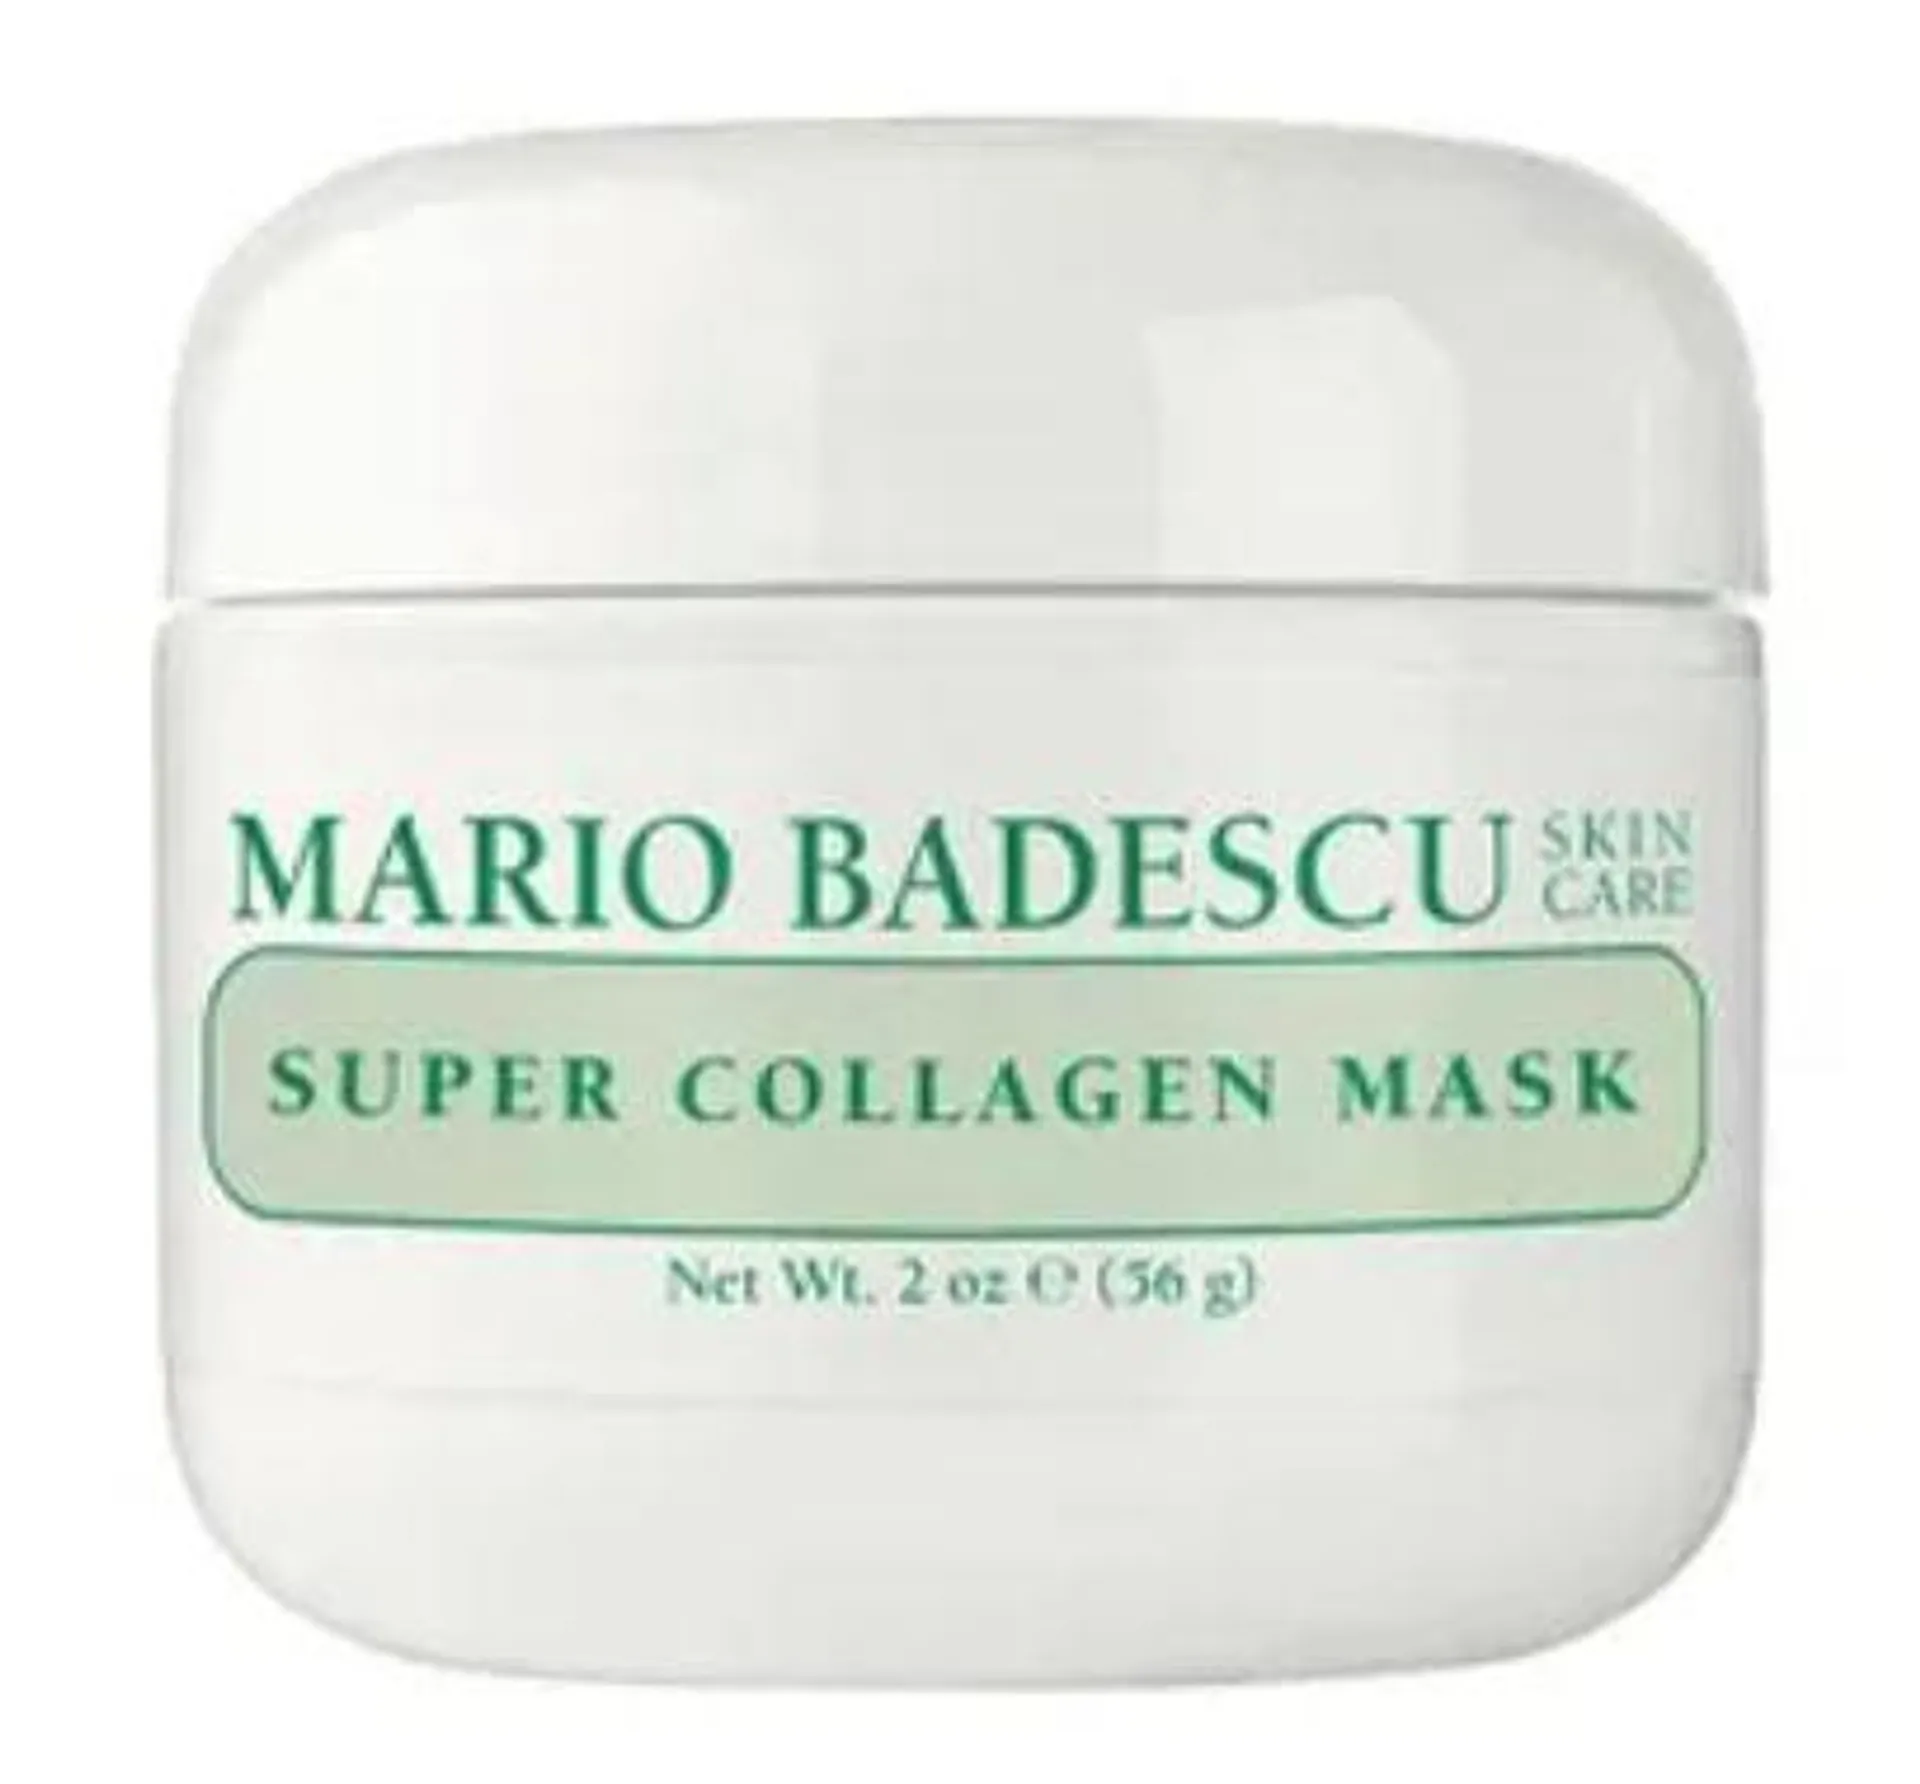 Mascarilla Colágeno Super Collagen Mask 56 g